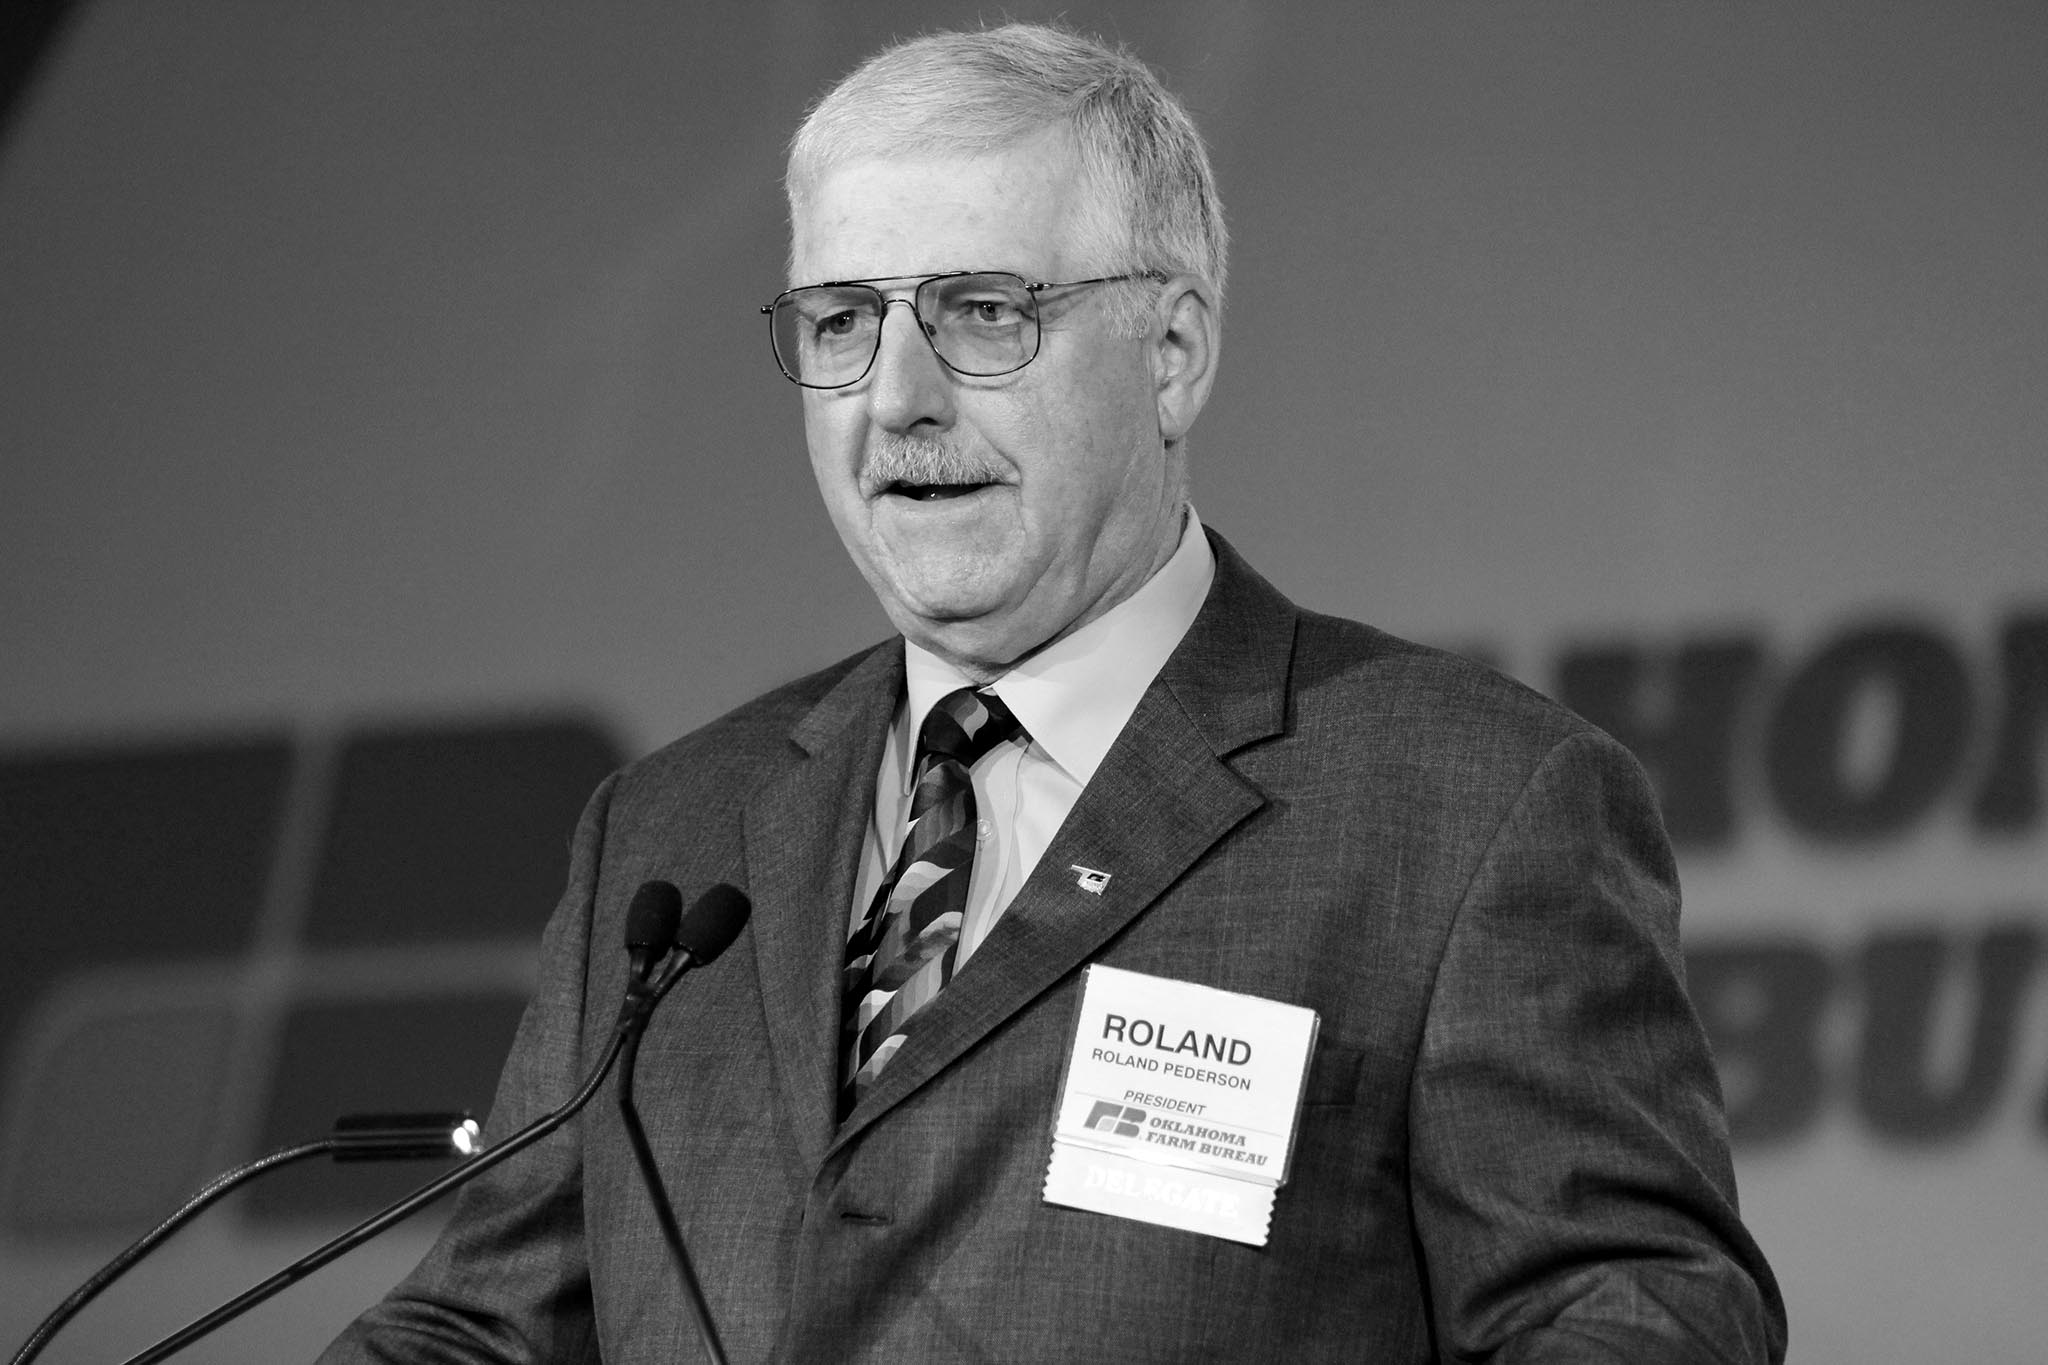 OKFB President Roland Pederson speaks at the 2013 OKFB Convention.